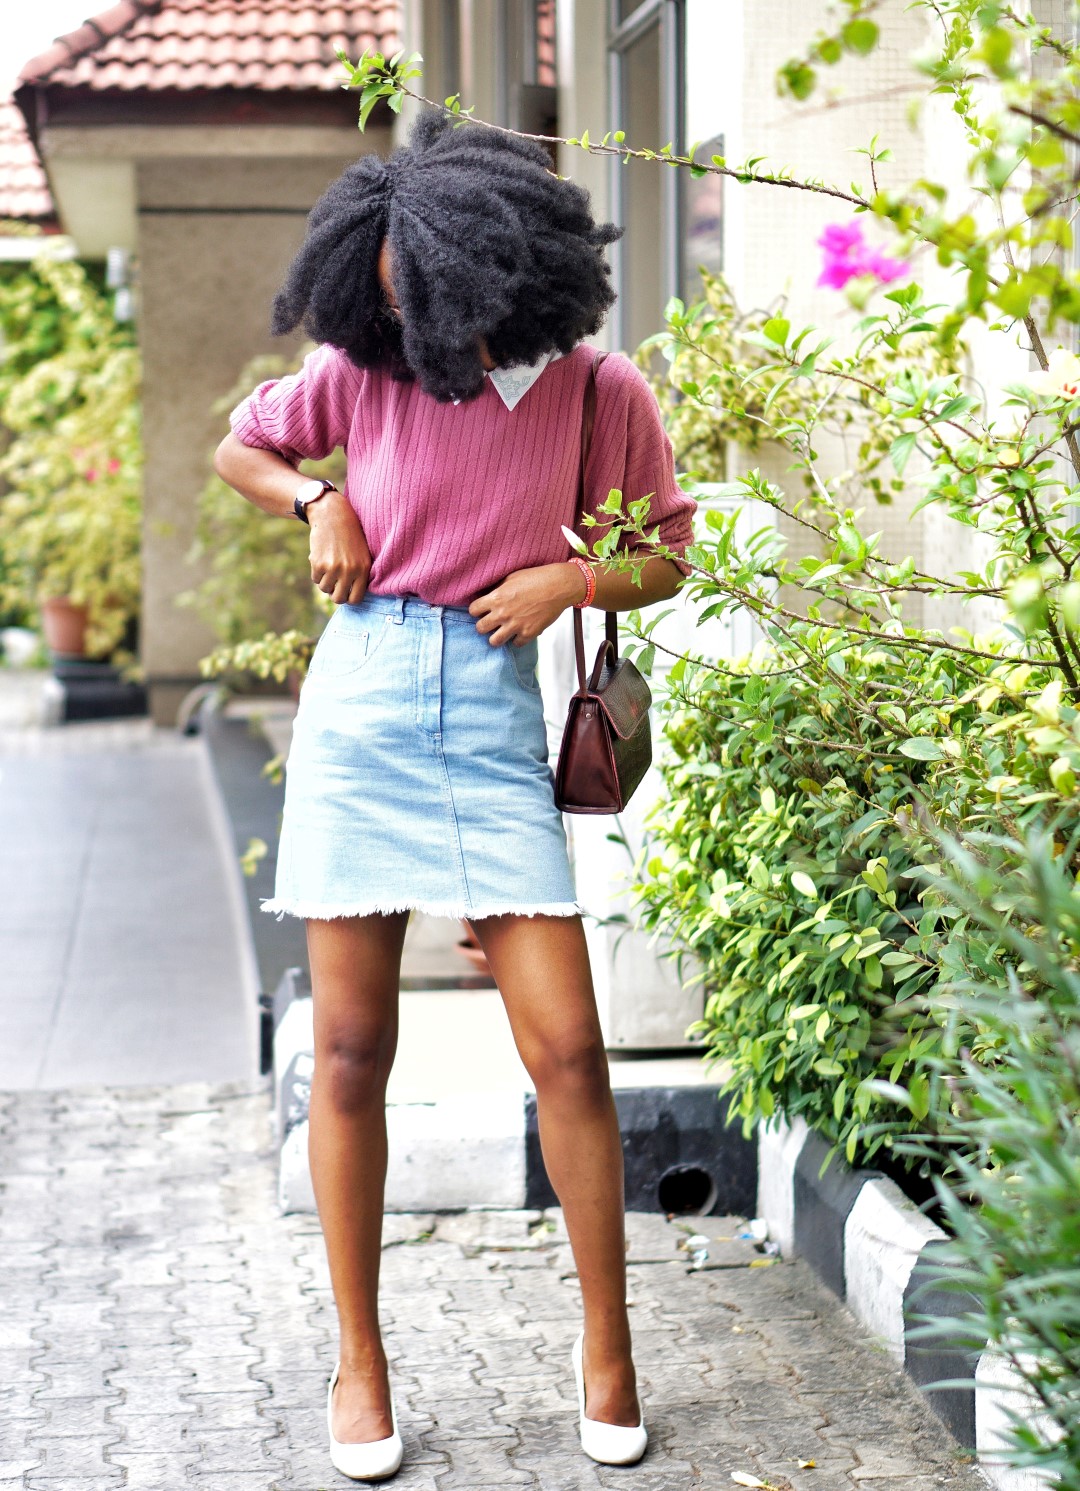 nigerian fashion blogger Cassie daves wearing a denim mini skirt, sweat shirt and white court shoes